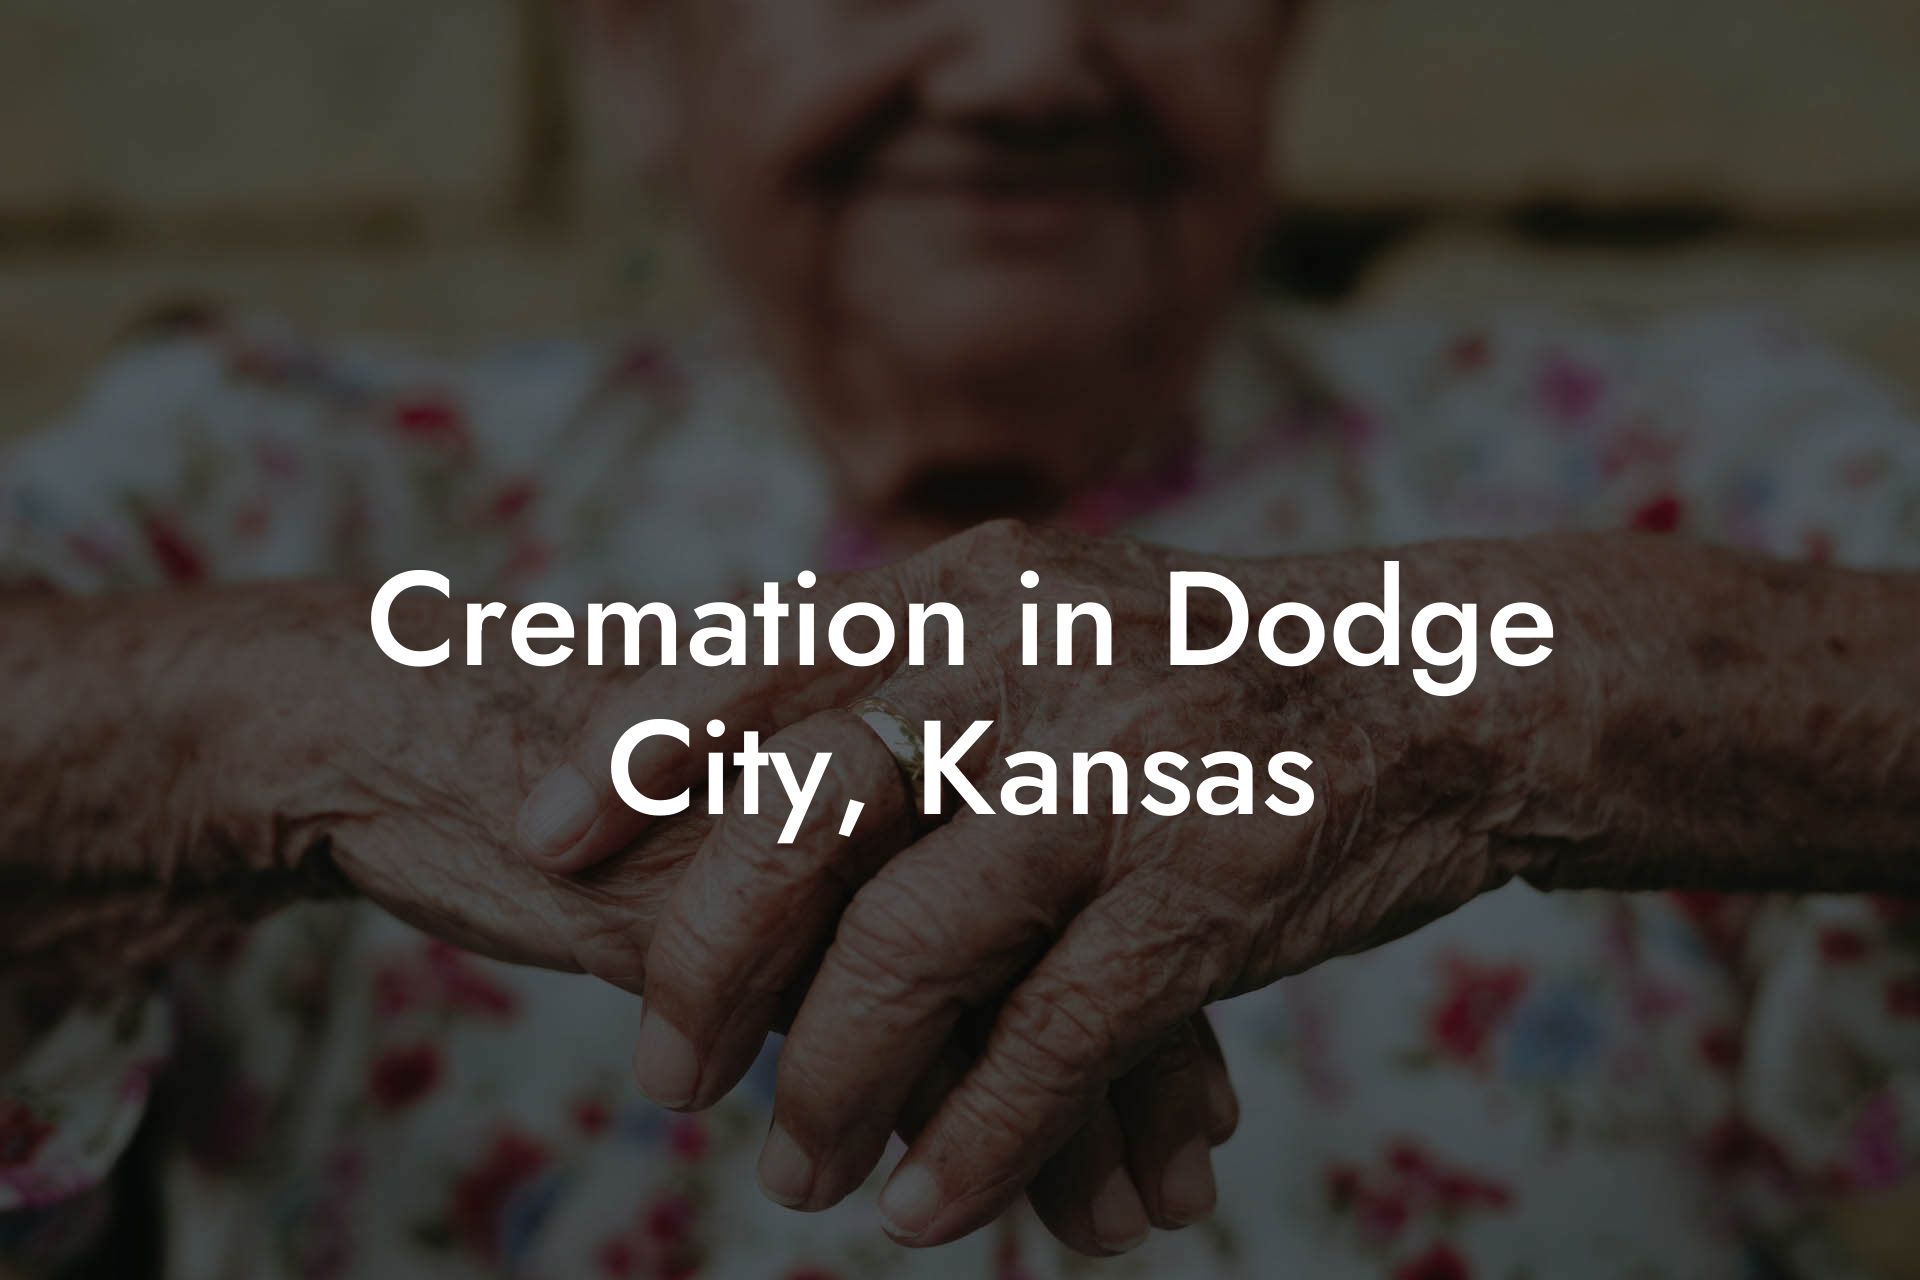 Cremation in Dodge City, Kansas